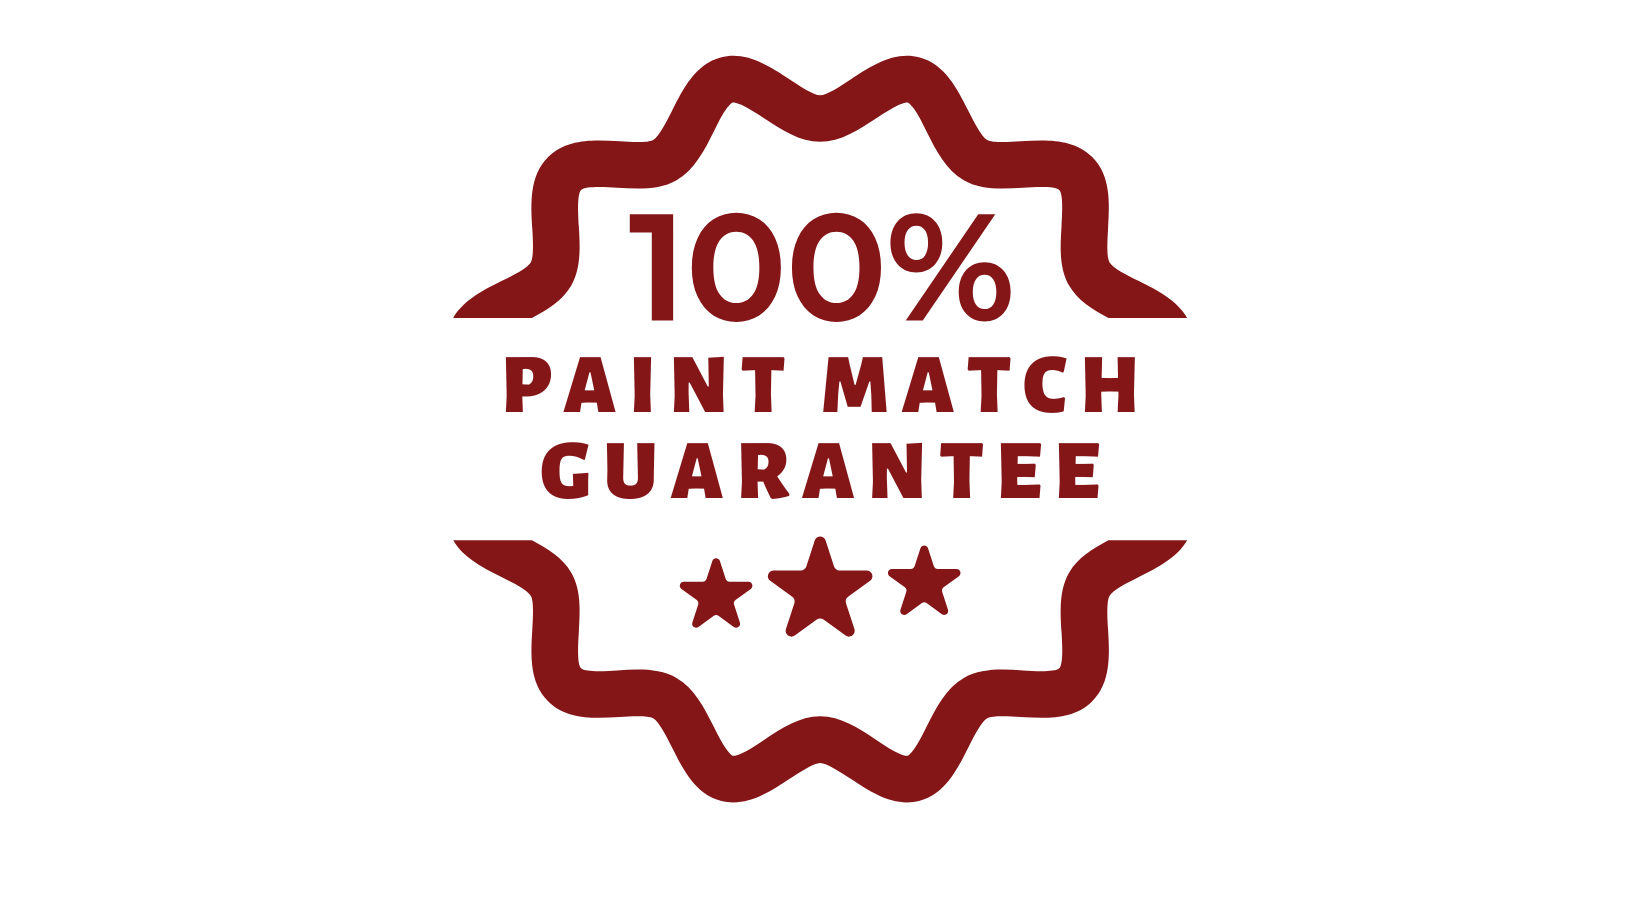 Paint Match Guarantee badge